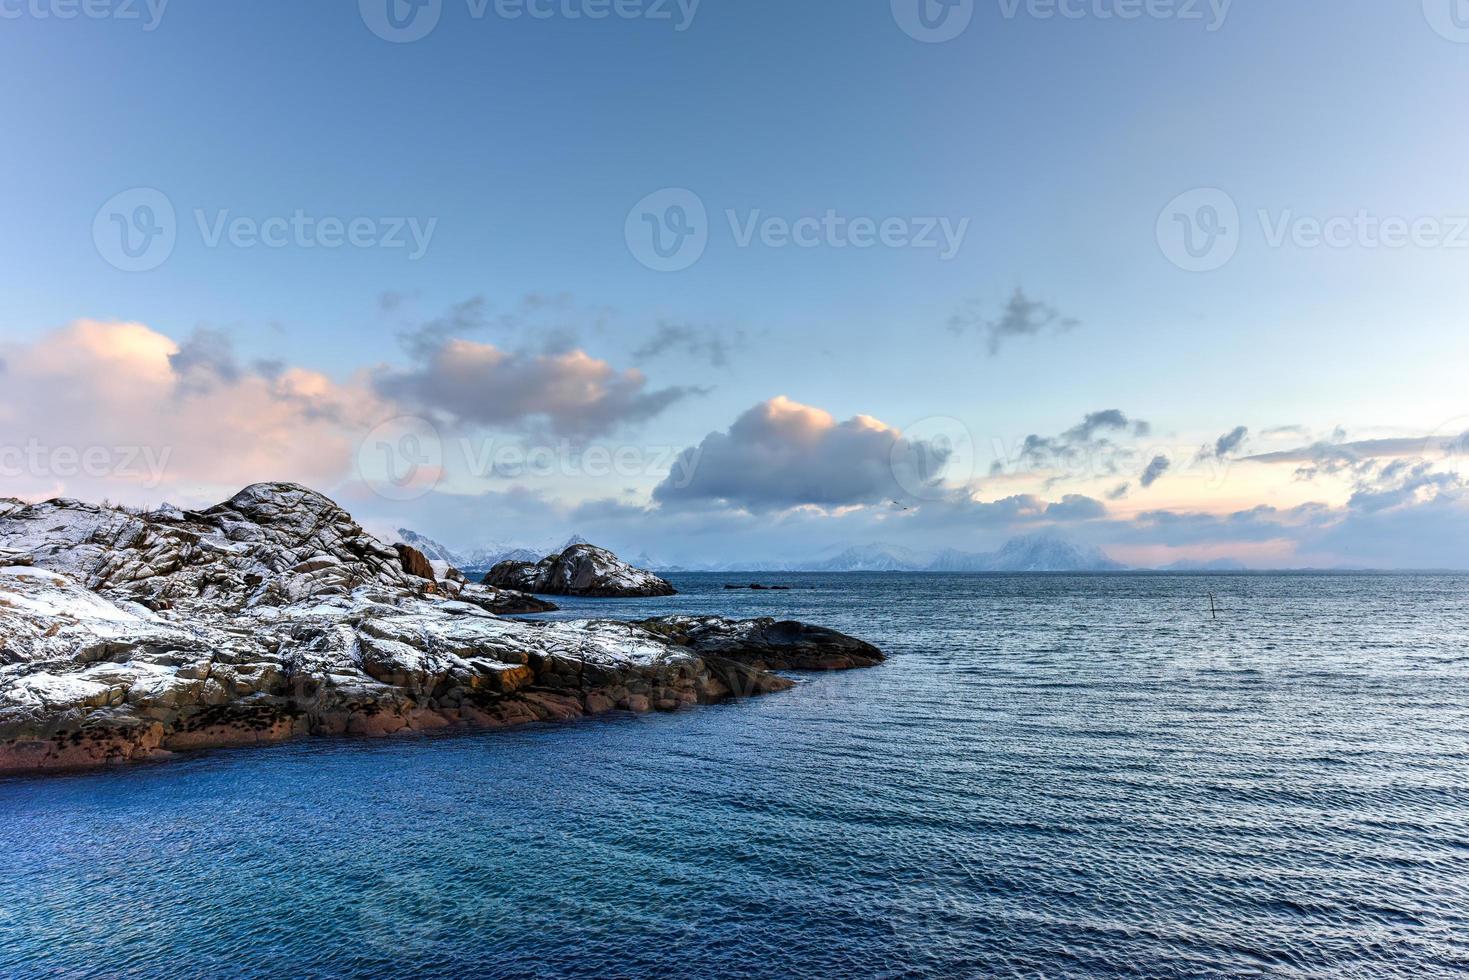 stamsund nas ilhas lofoten, noruega no inverno. foto